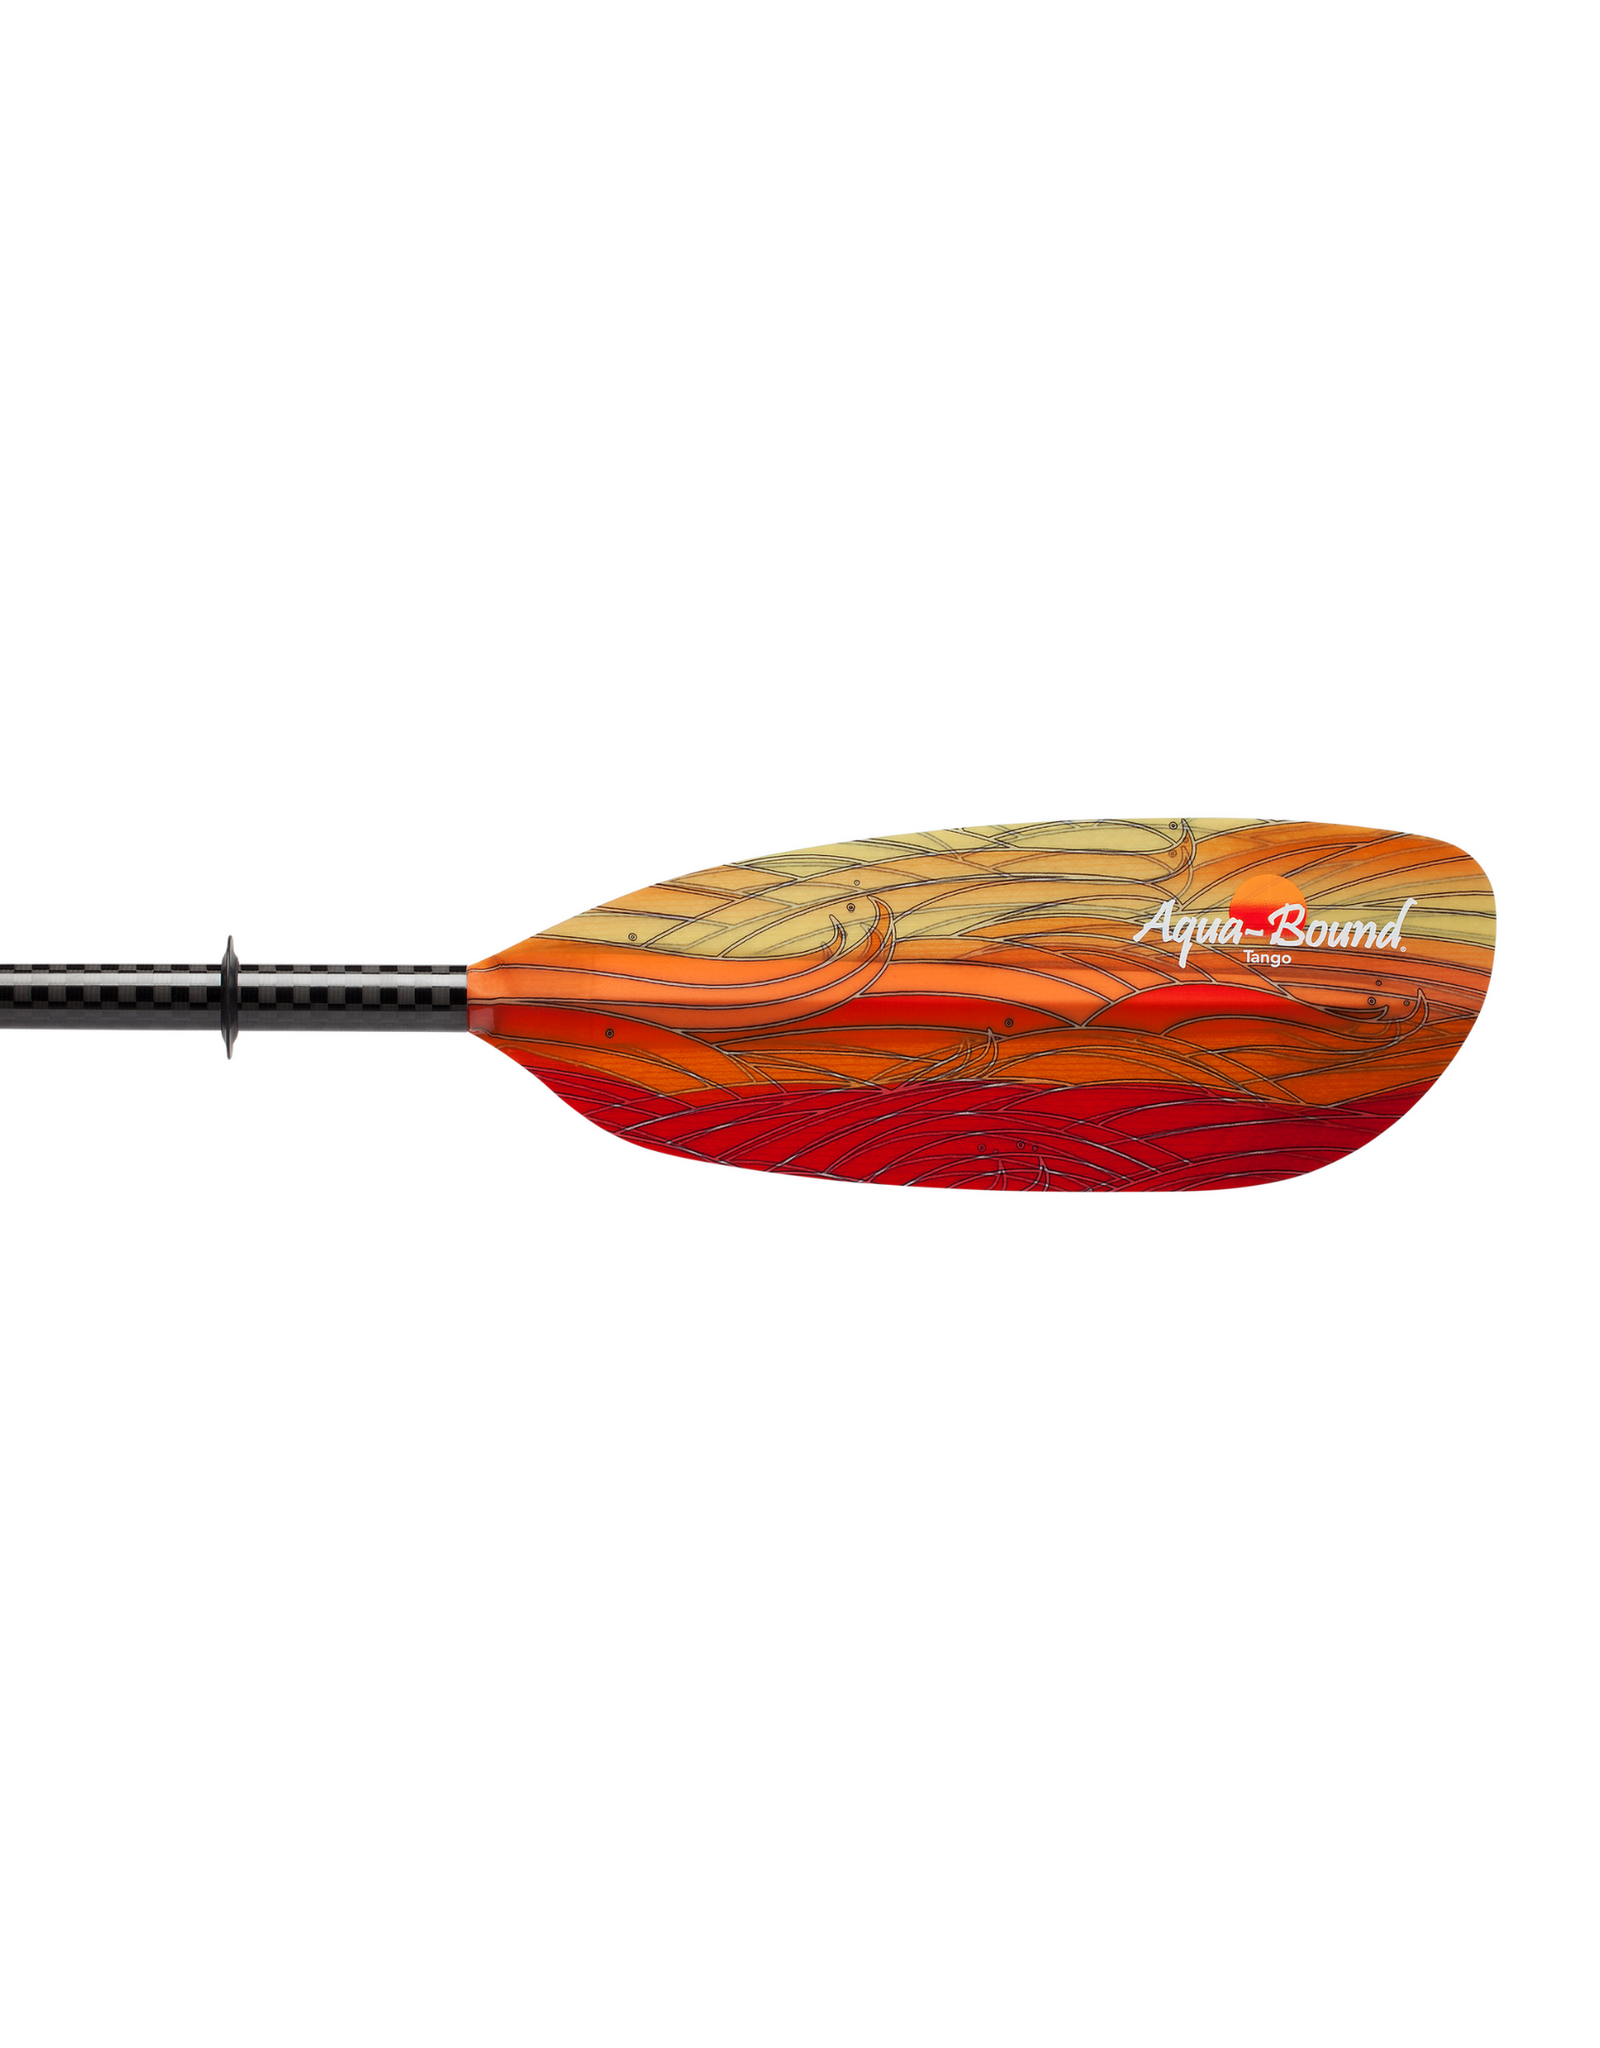 Aqua-Bound Aqua-Bound Tango FG Posi-lock paddle